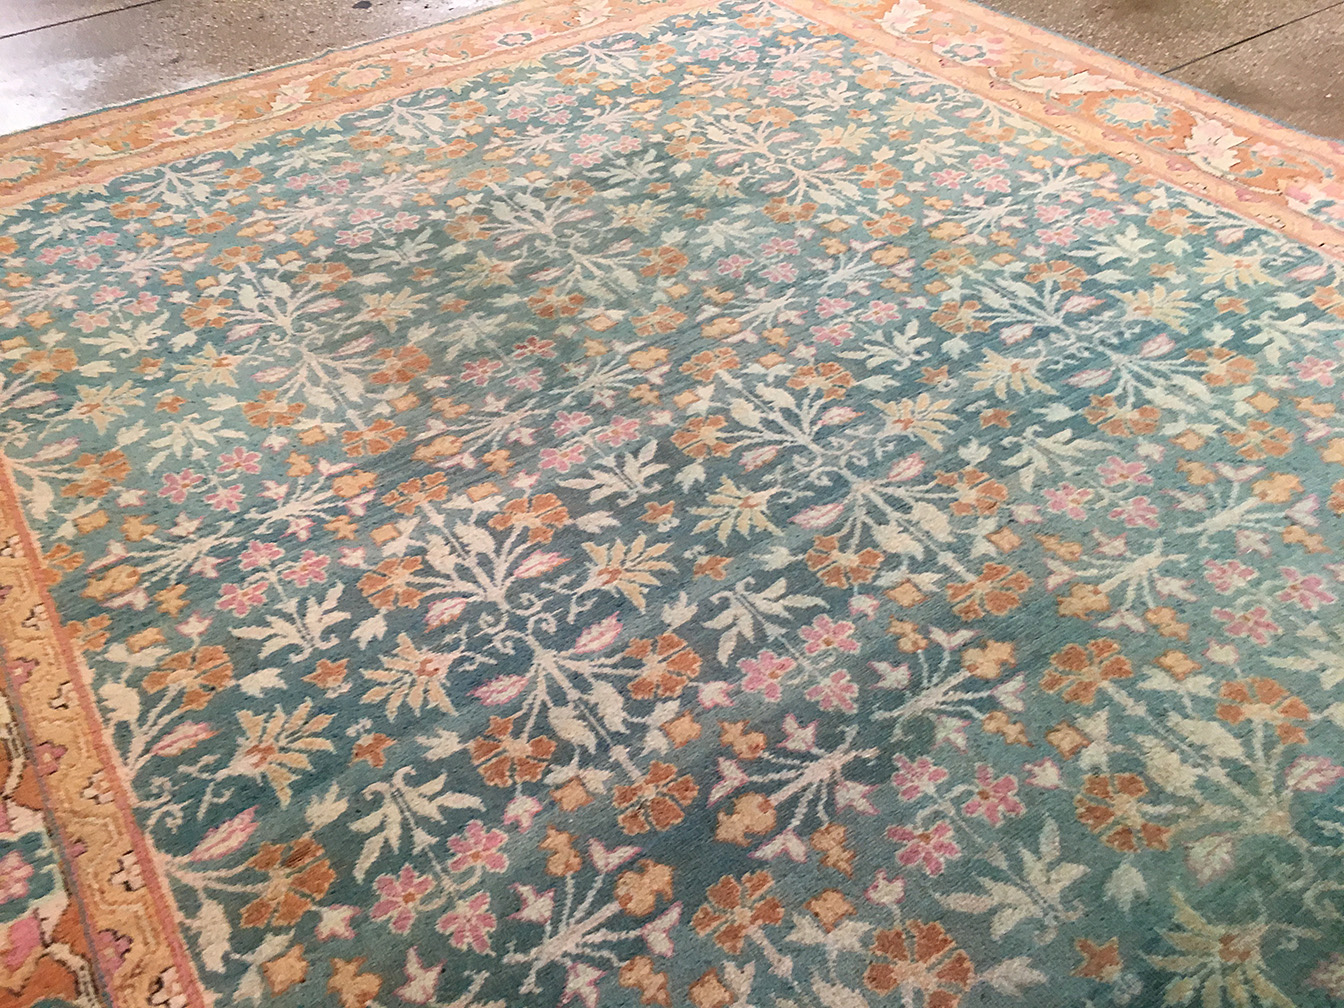 Antique amritsar Carpet - # 54180